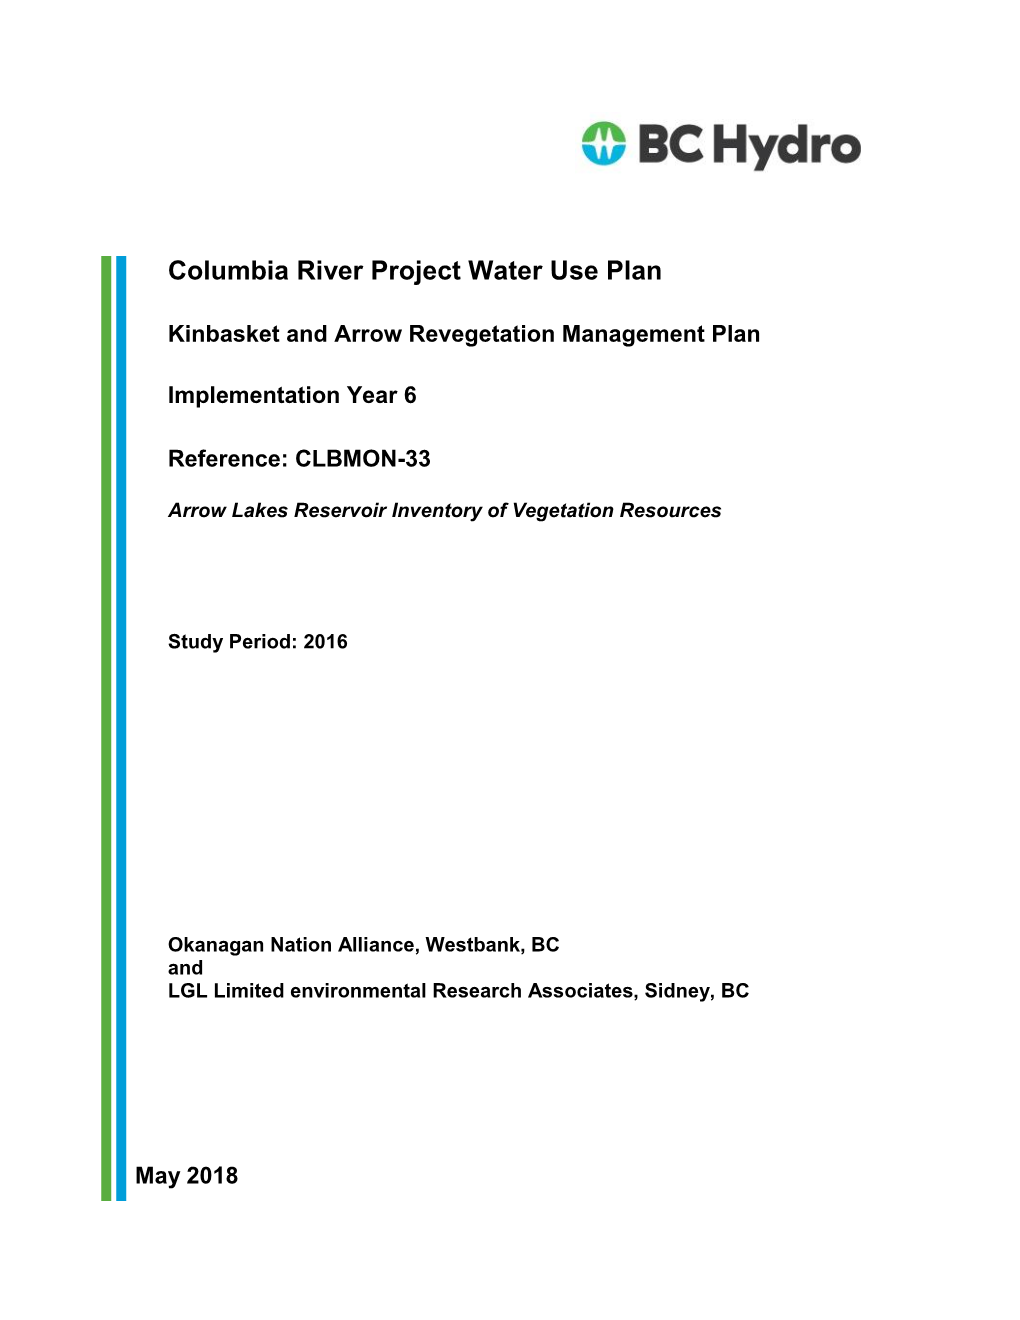 CLBMON-33 Arrow Lakes Reservoir Inventory of Vegetation Resources